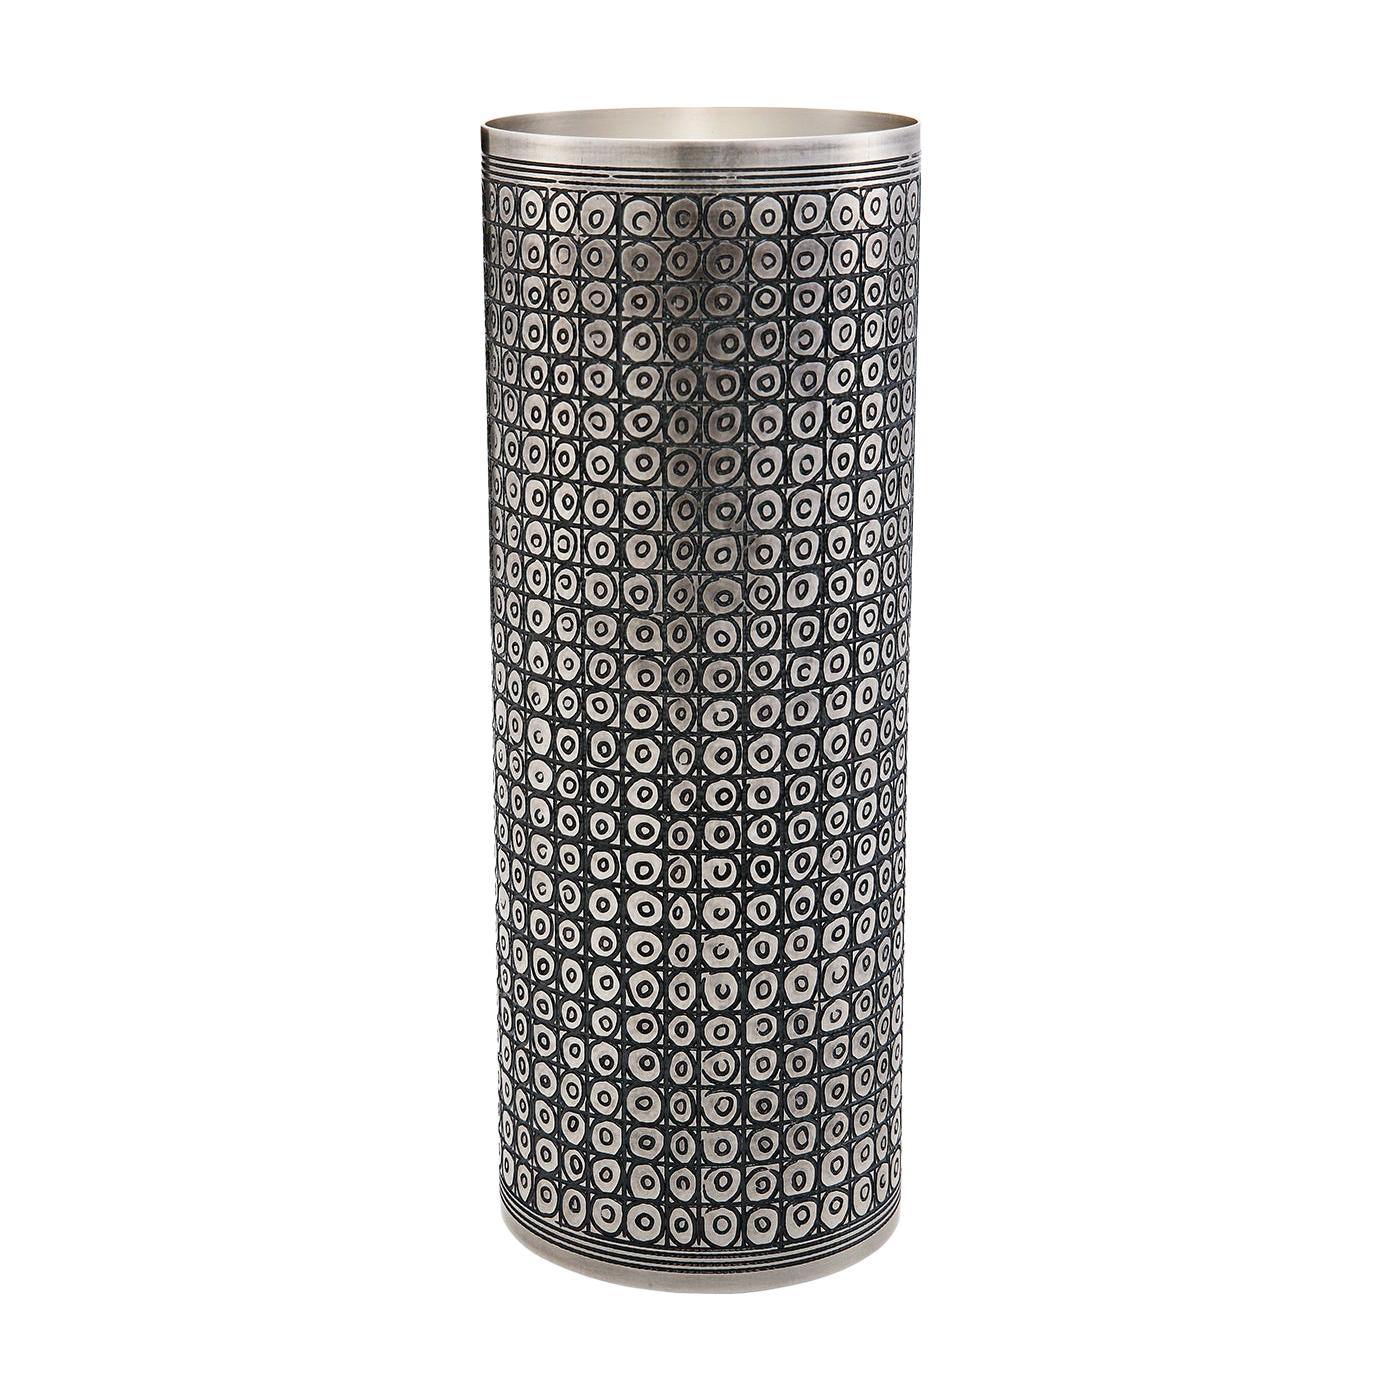 Sumer Silver Vase by Zanetto